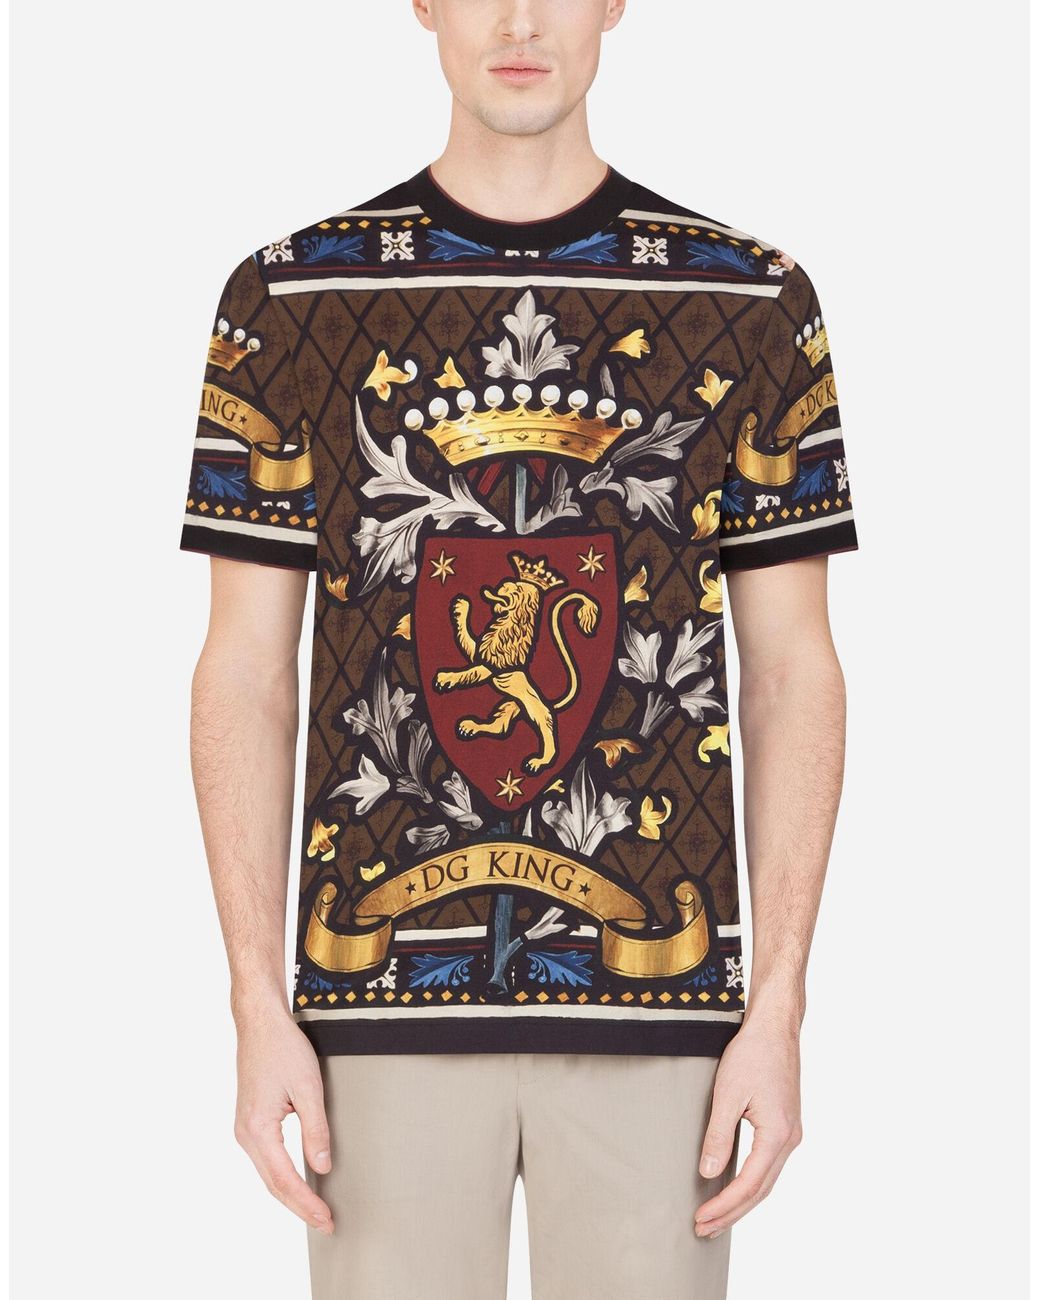 Dolce & Gabbana Cotton Dg King Printed T-shirt in Brown for Men - Save ...